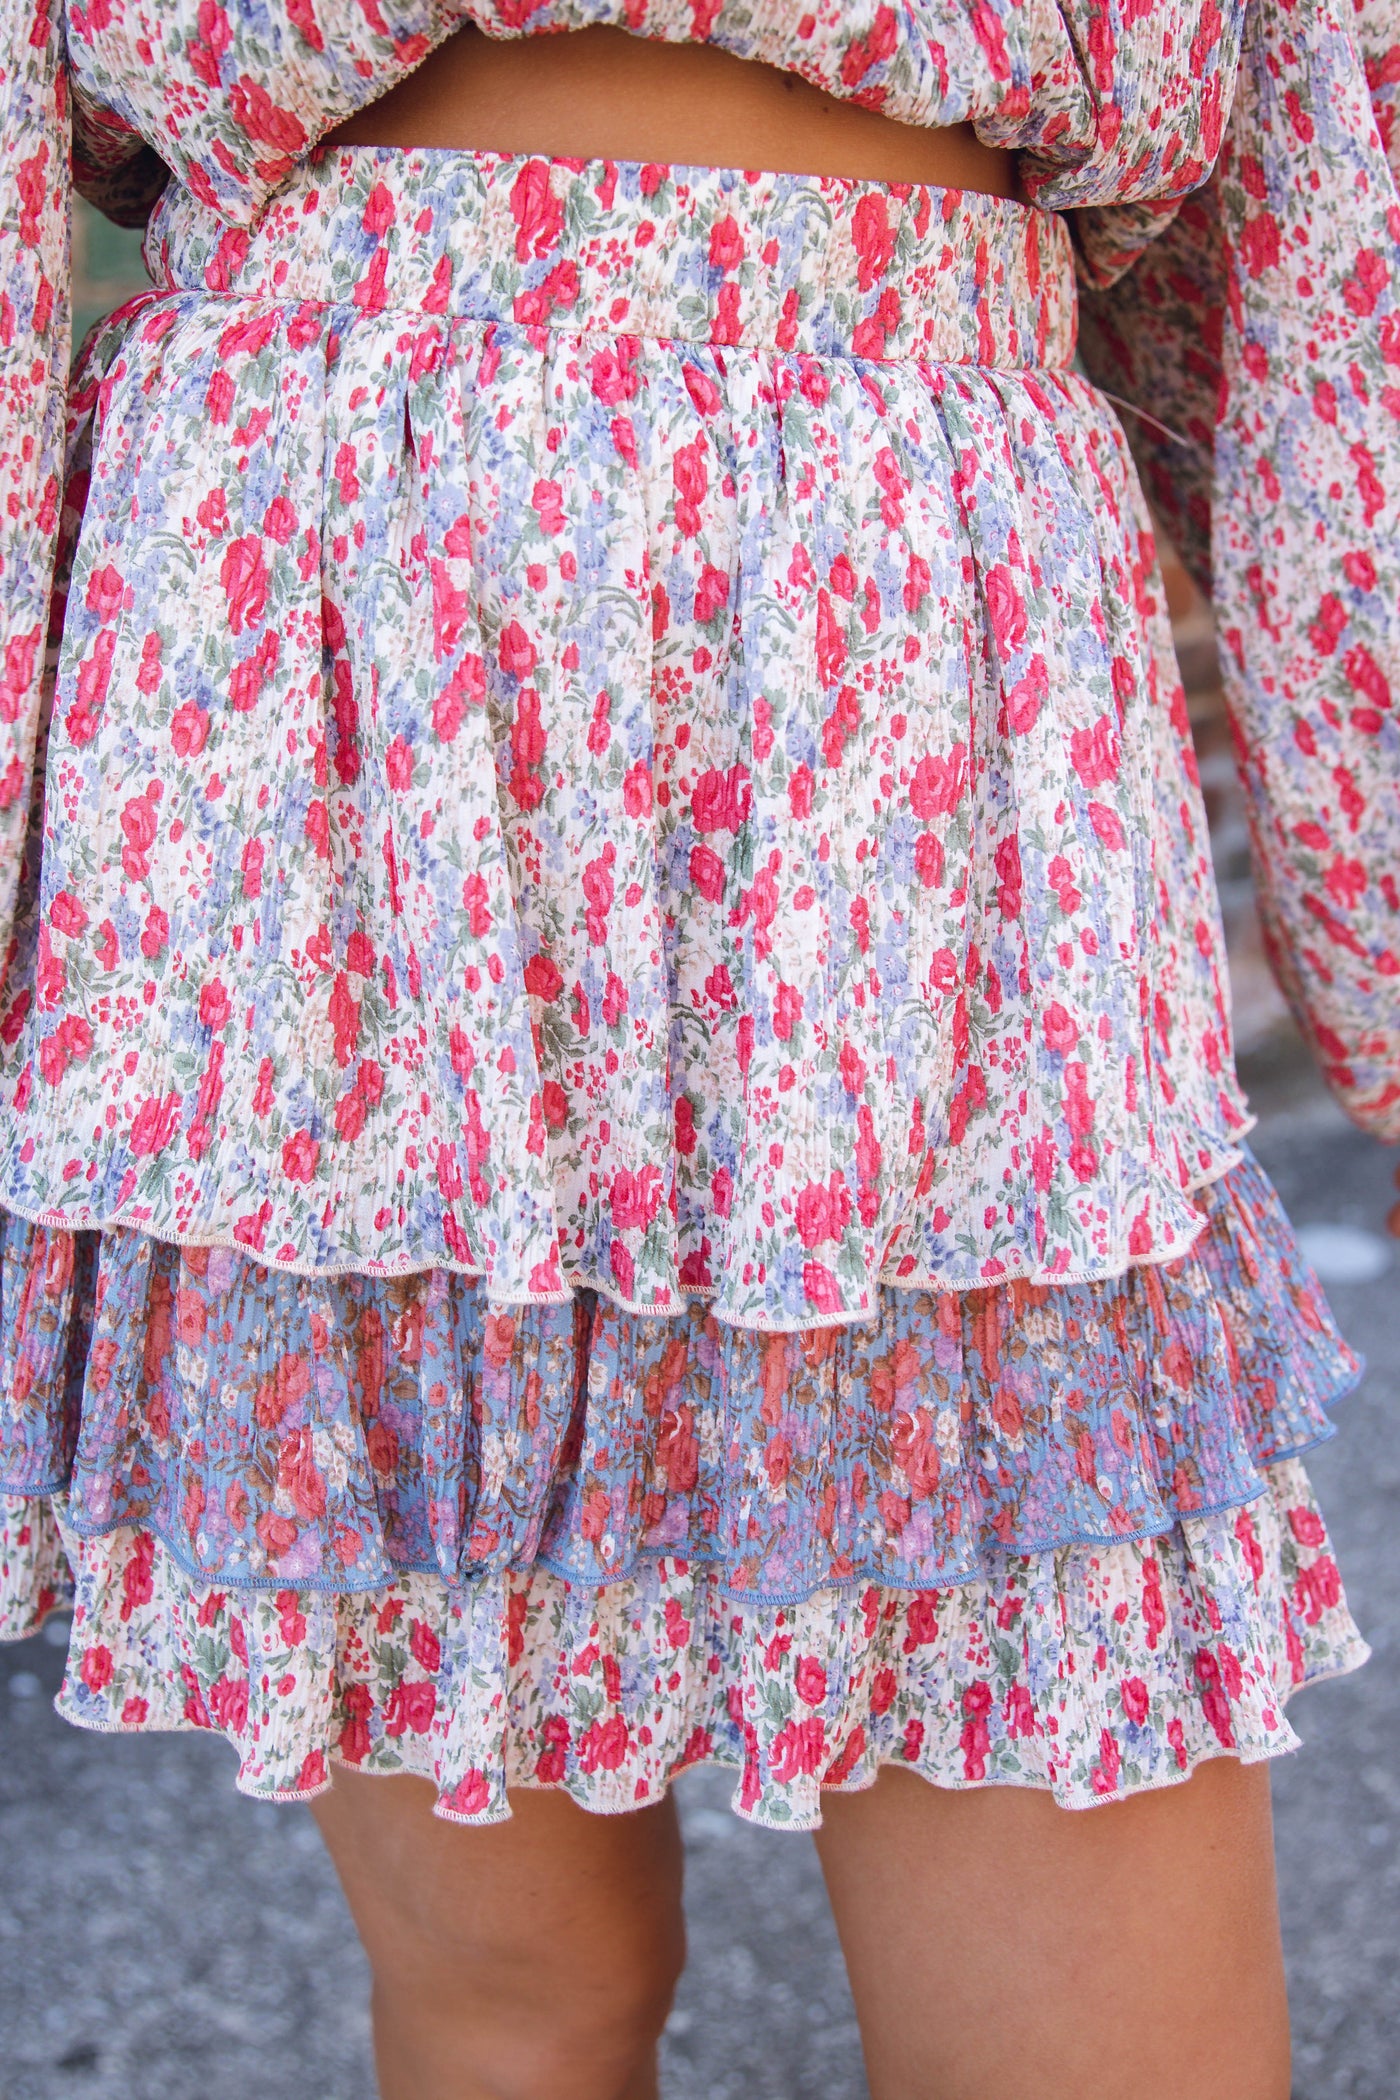 Romantic Floral Print Skirt- Ruffle Mini Floral Skirt- Matching Floral Set- $40